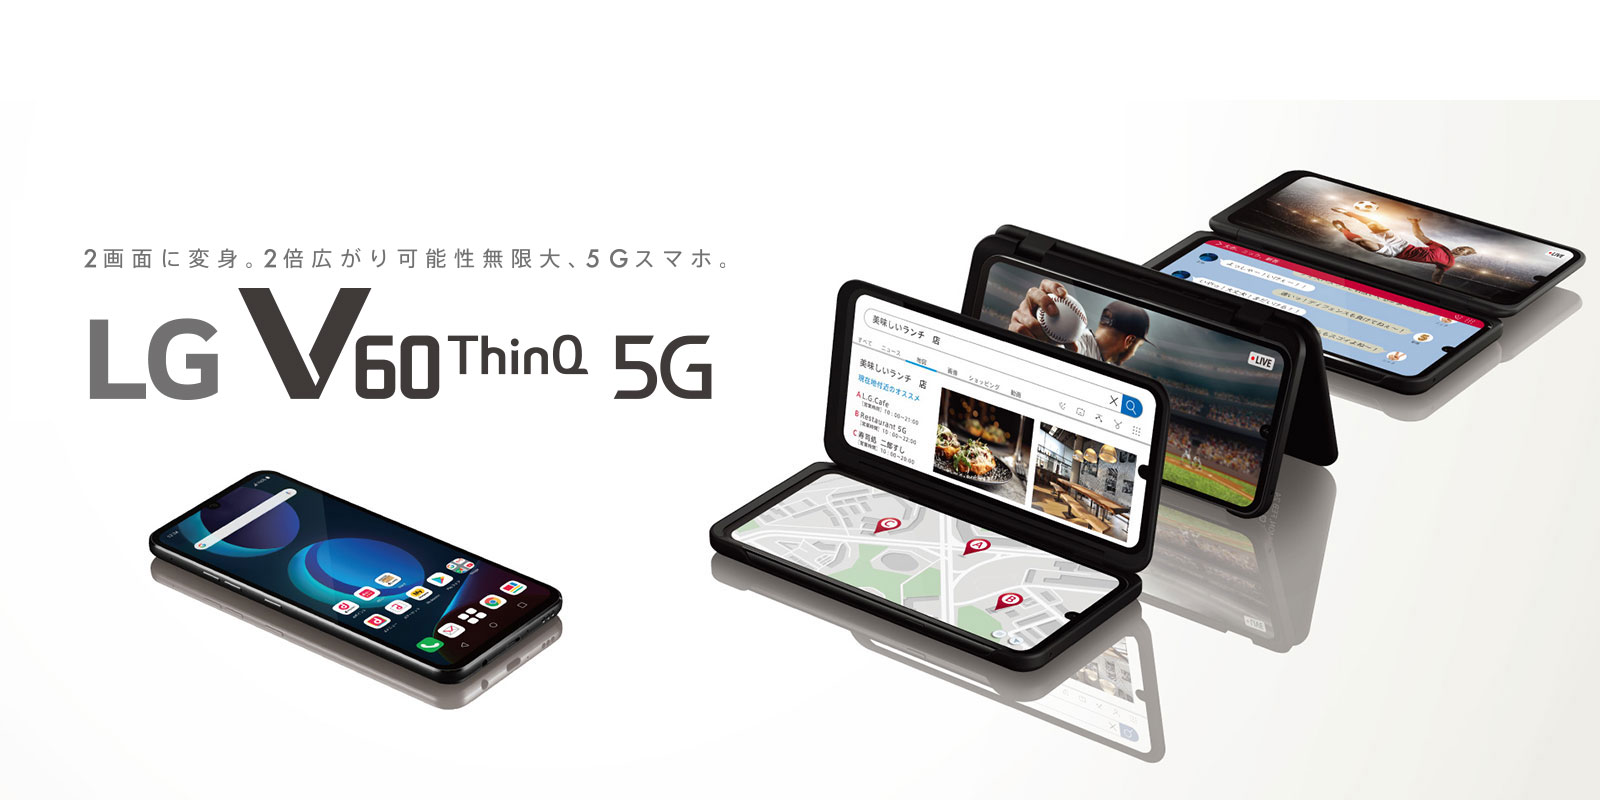 LG V60 ThinQ5G(L-51A)スペックレビュー!発売日や価格、在庫状況について。 - iPhone大陸